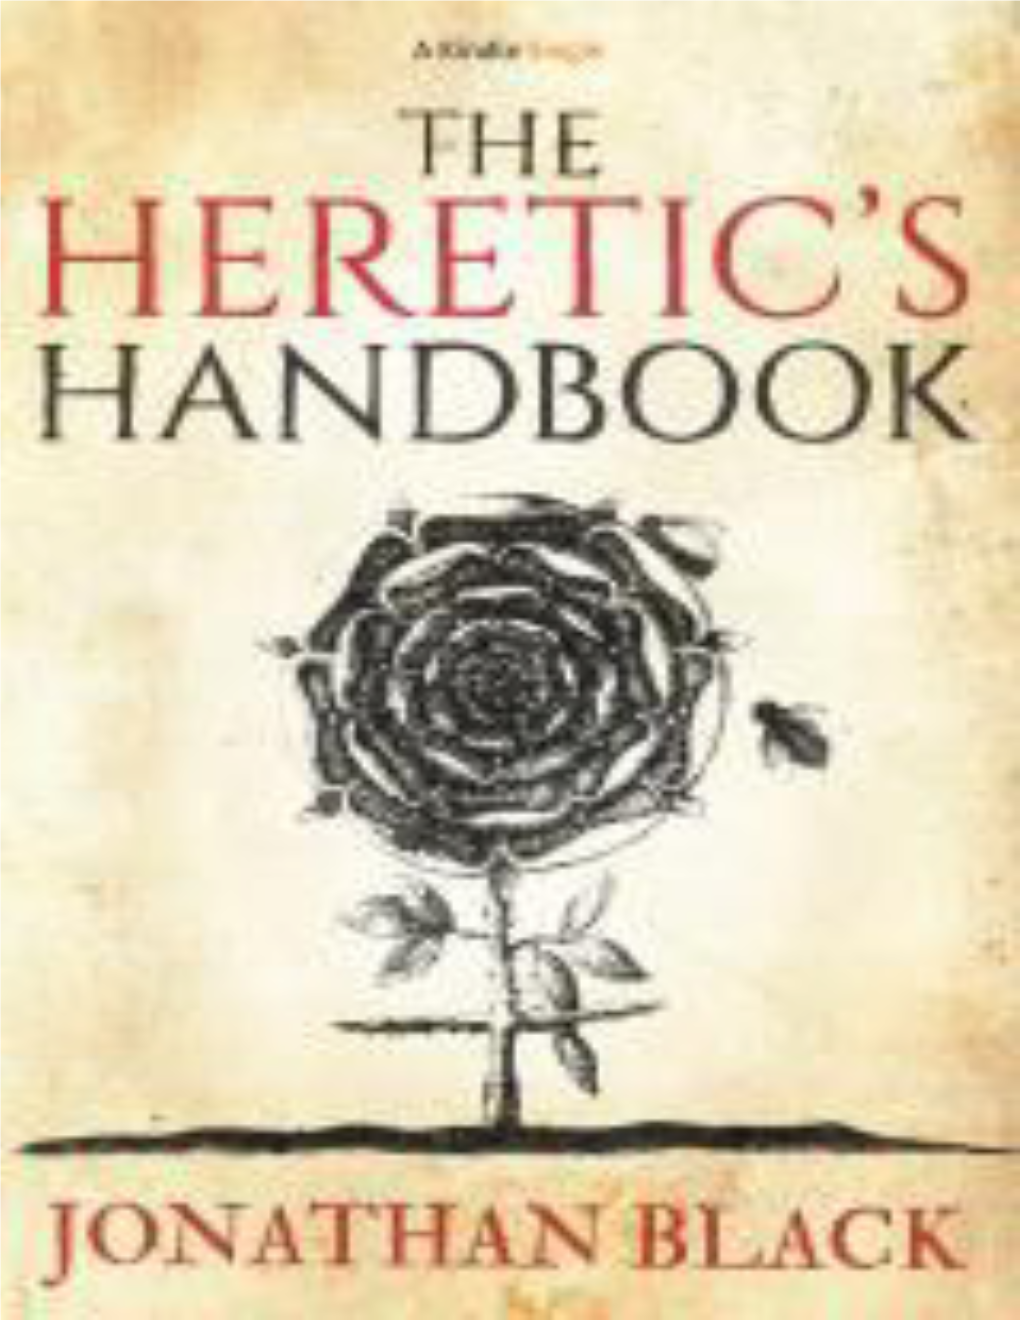 The Heretic's Handbook (Kindle Single)